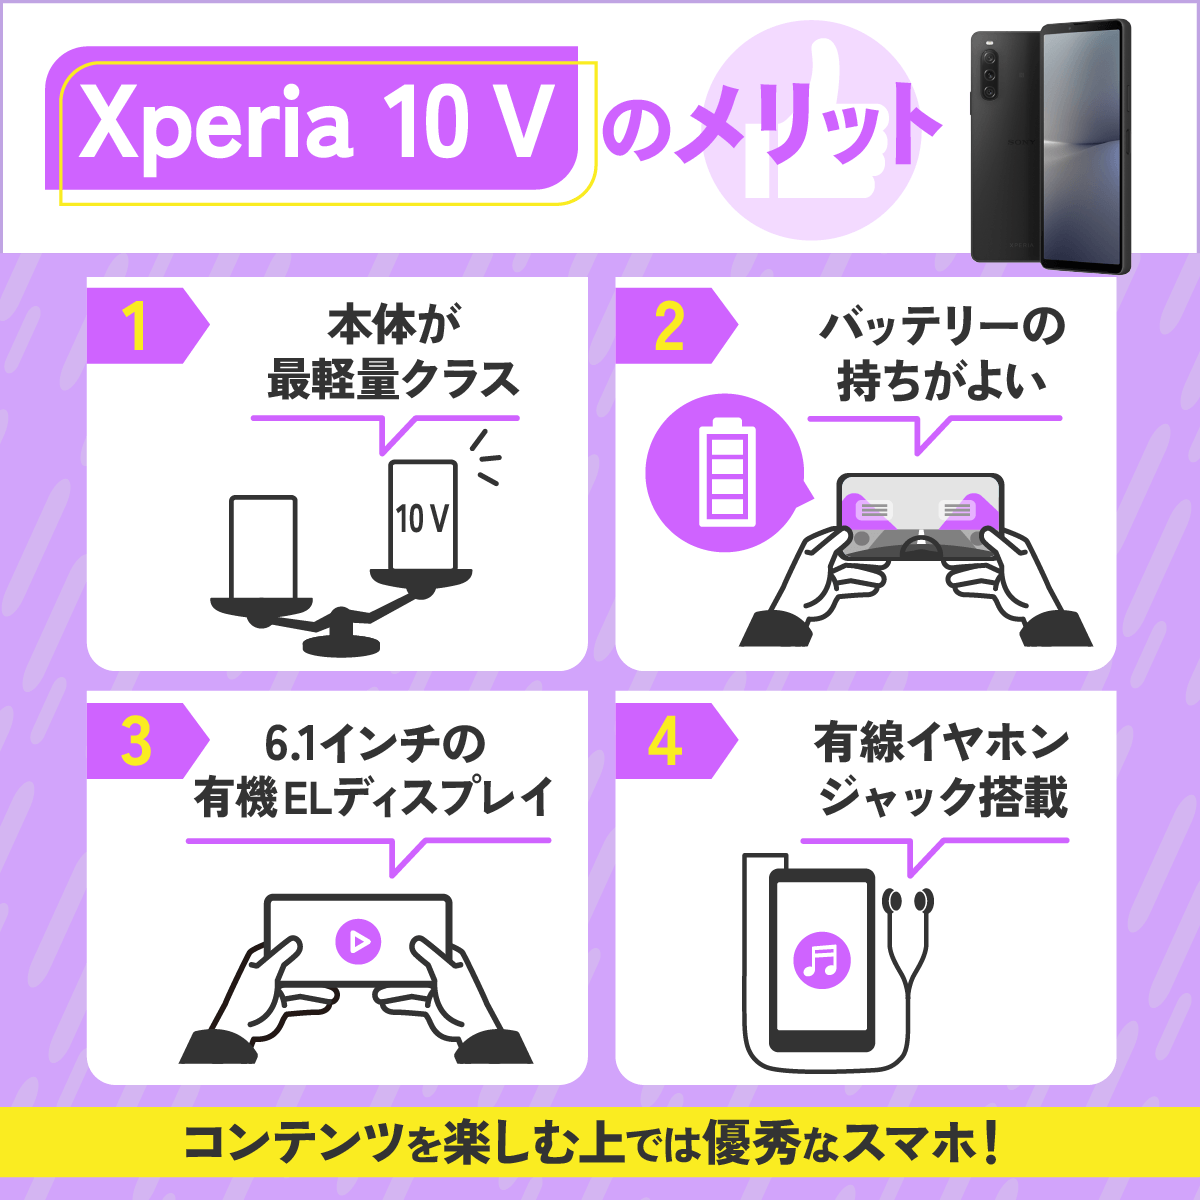 Xperia 10 Vのメリット